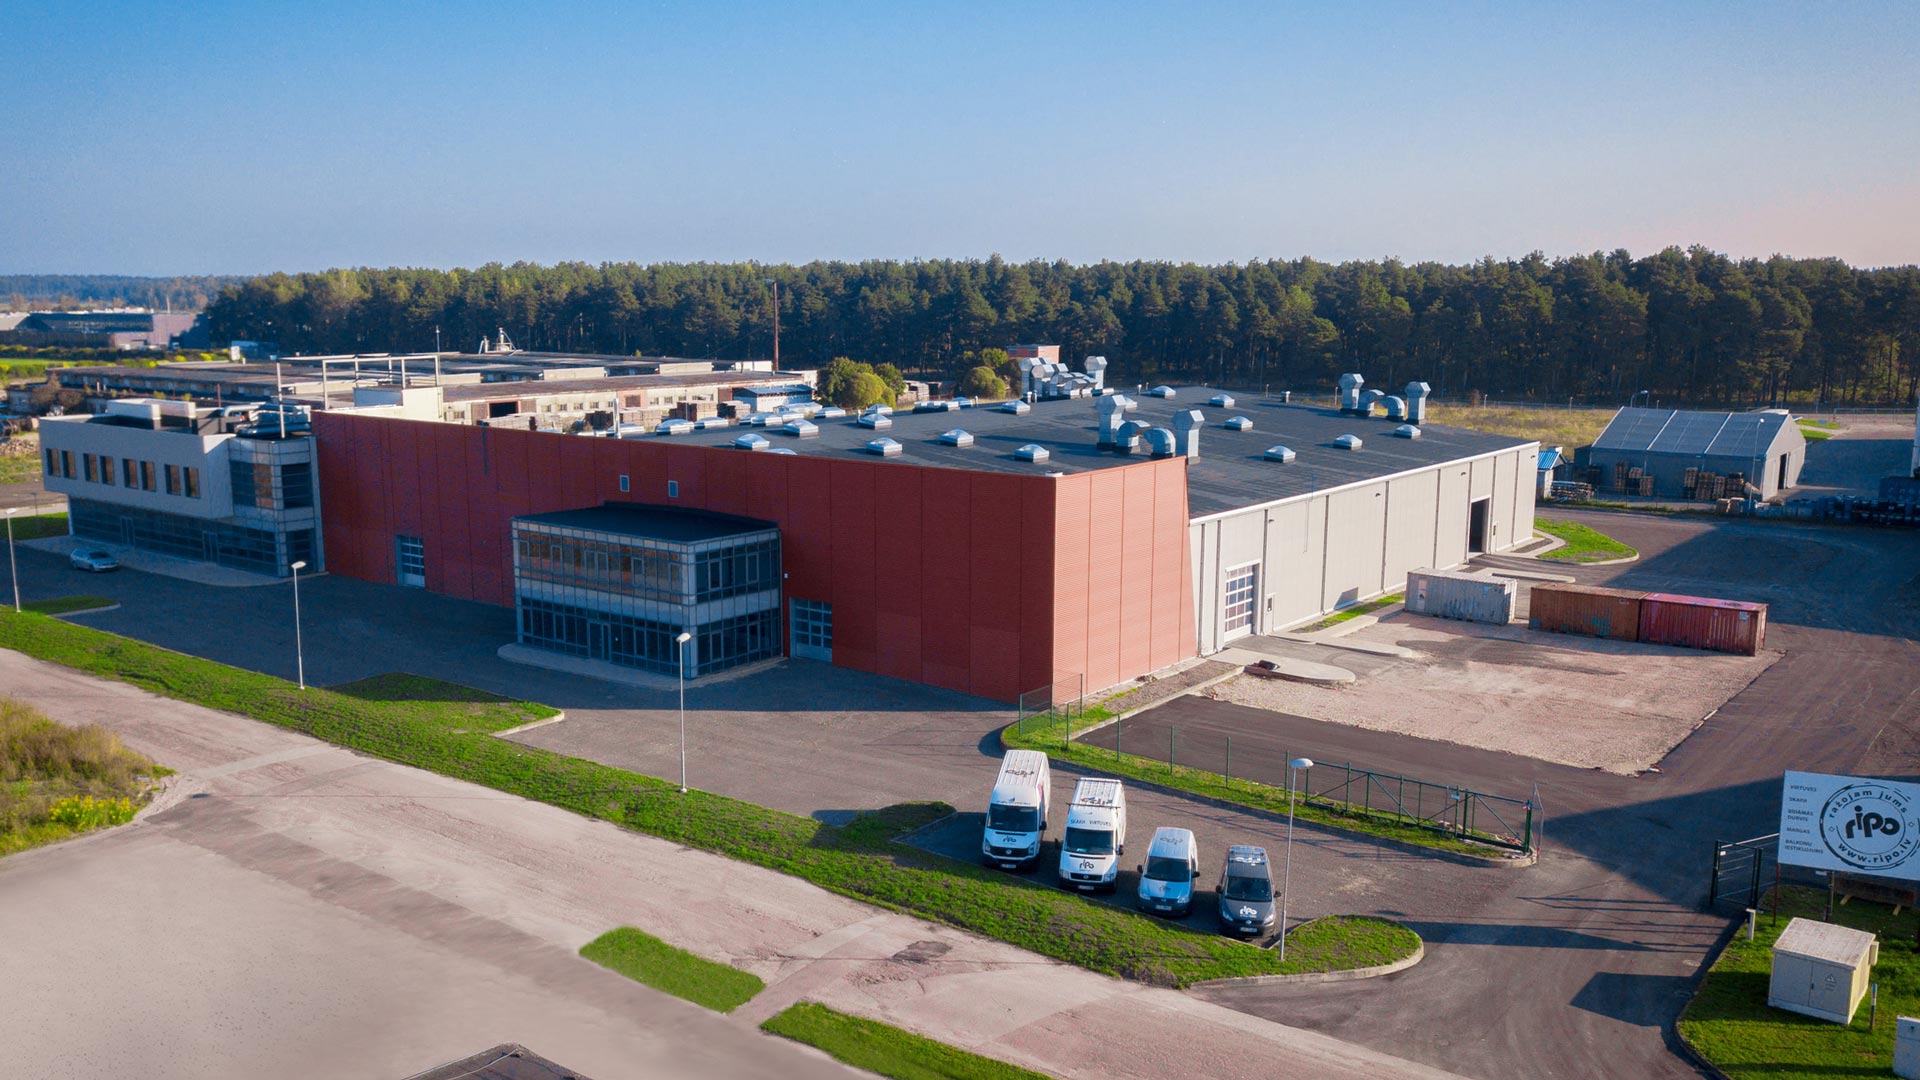 RIPO fabrika new manufacturing complex